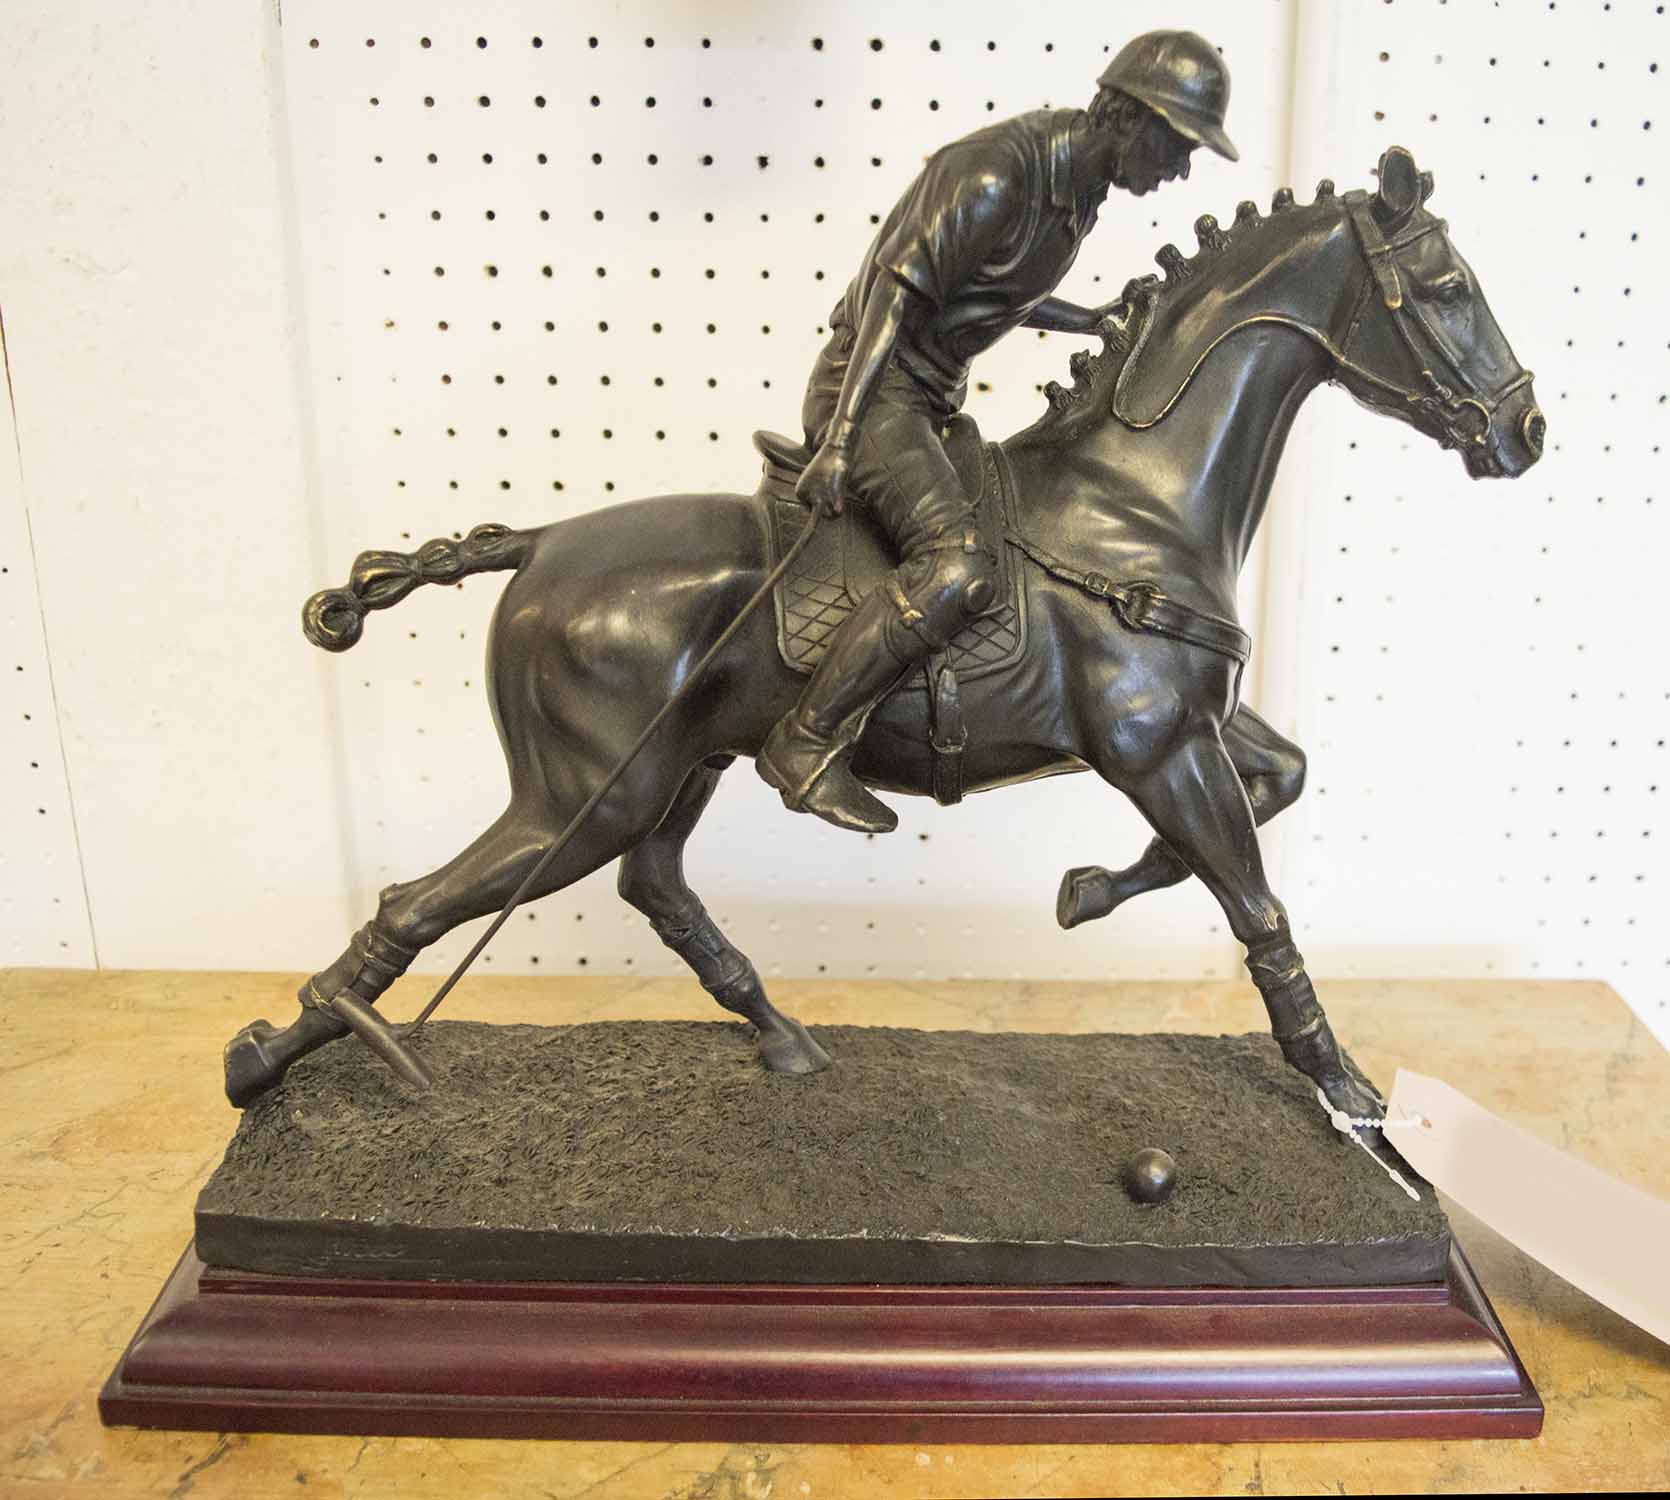 BRONZE FIGURE, contemporary of a Polo player on horseback, 32cm H x 34cm L x 15cm W.